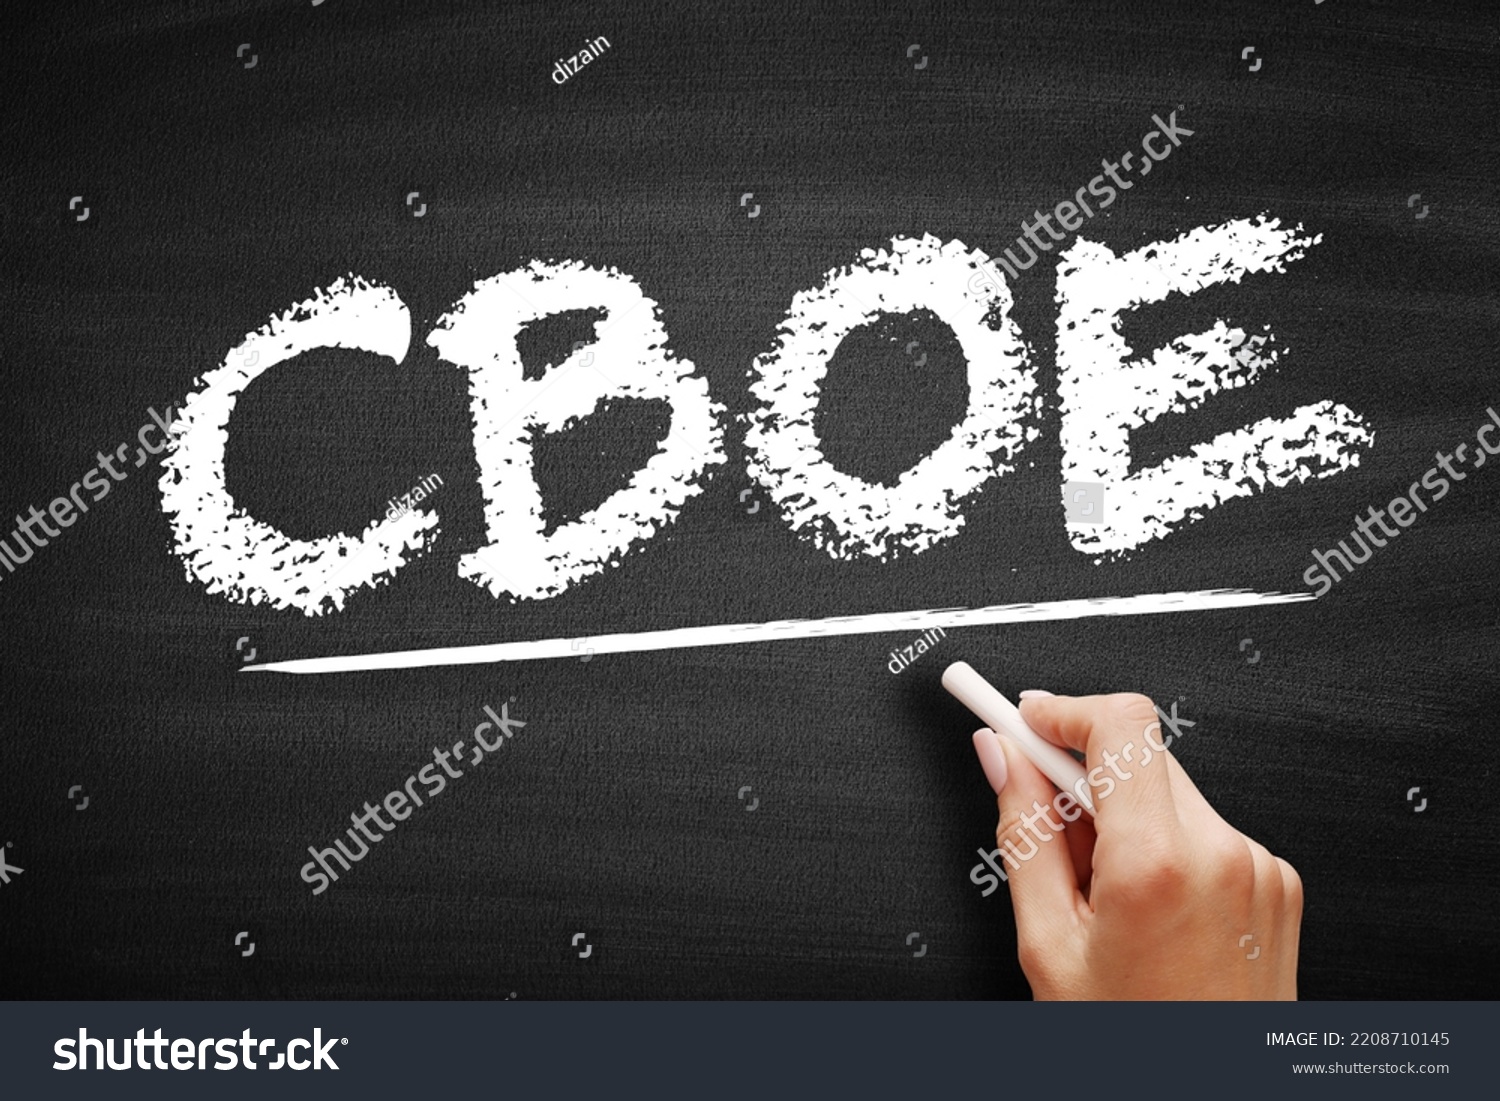 CBOE – Chicago Board Options Exchange acronym, business concept on blackboard #2208710145